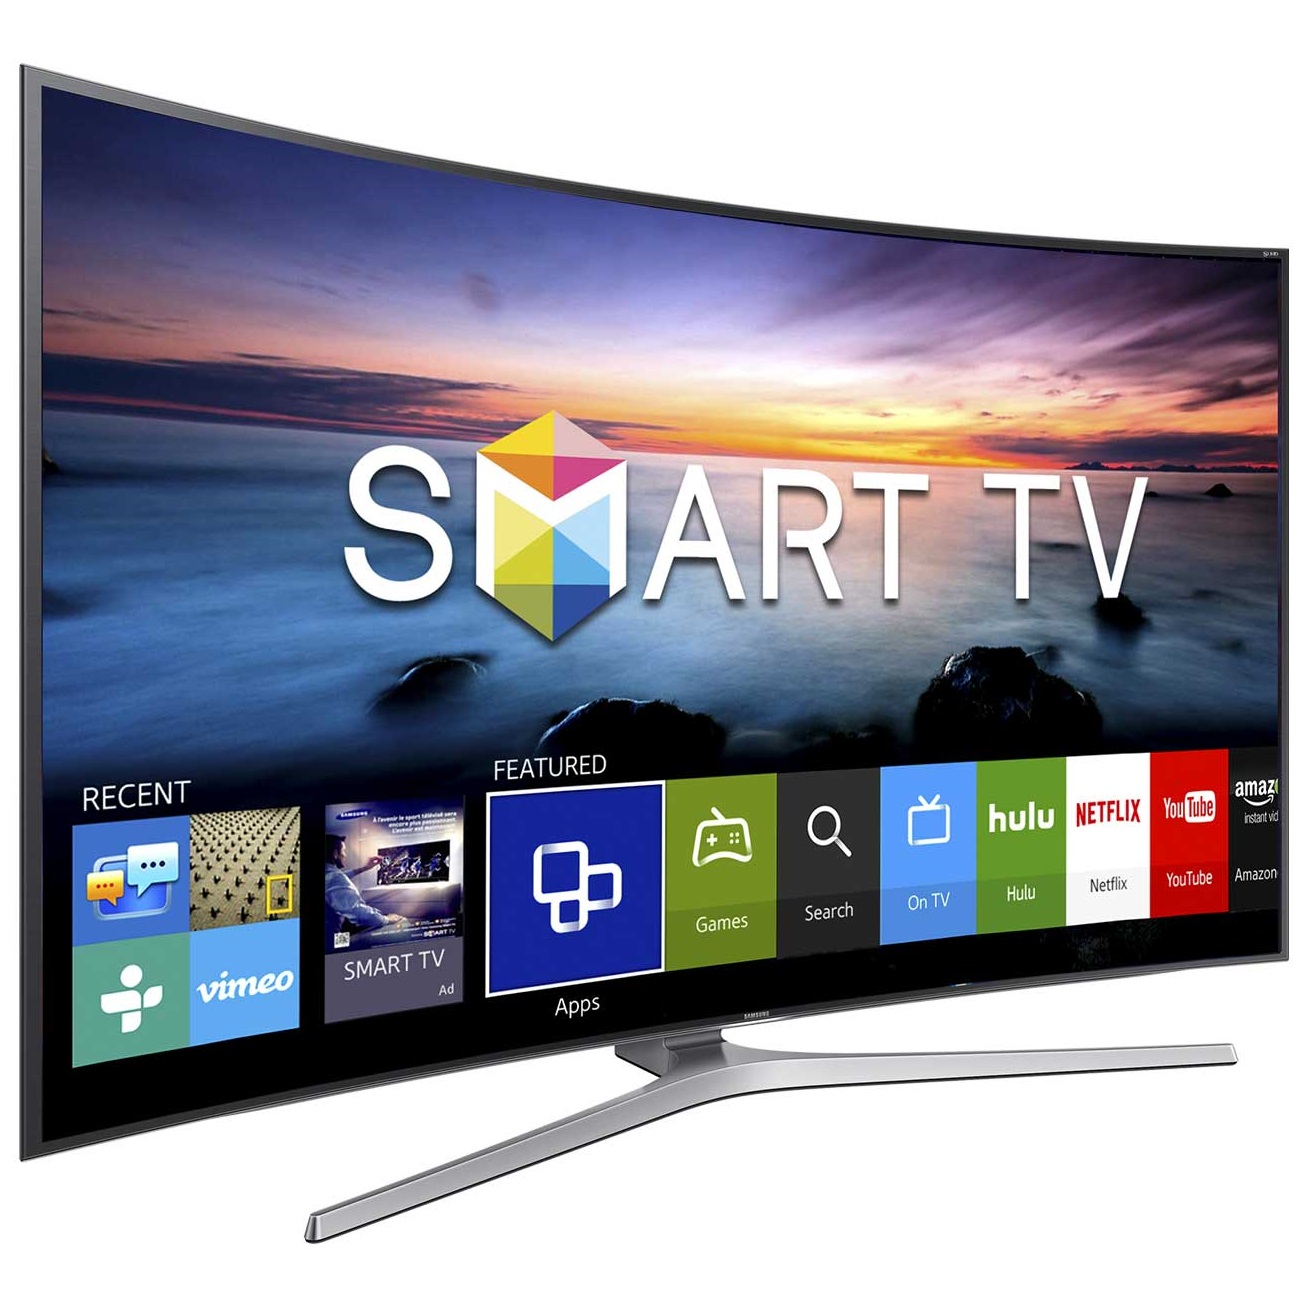 Смарт тв арк. Samsung Smart TV. Телевизор самсунг смарт ТВ. Телевизор самсунг без смарт ТВ. Samsung Smart TV 2016.